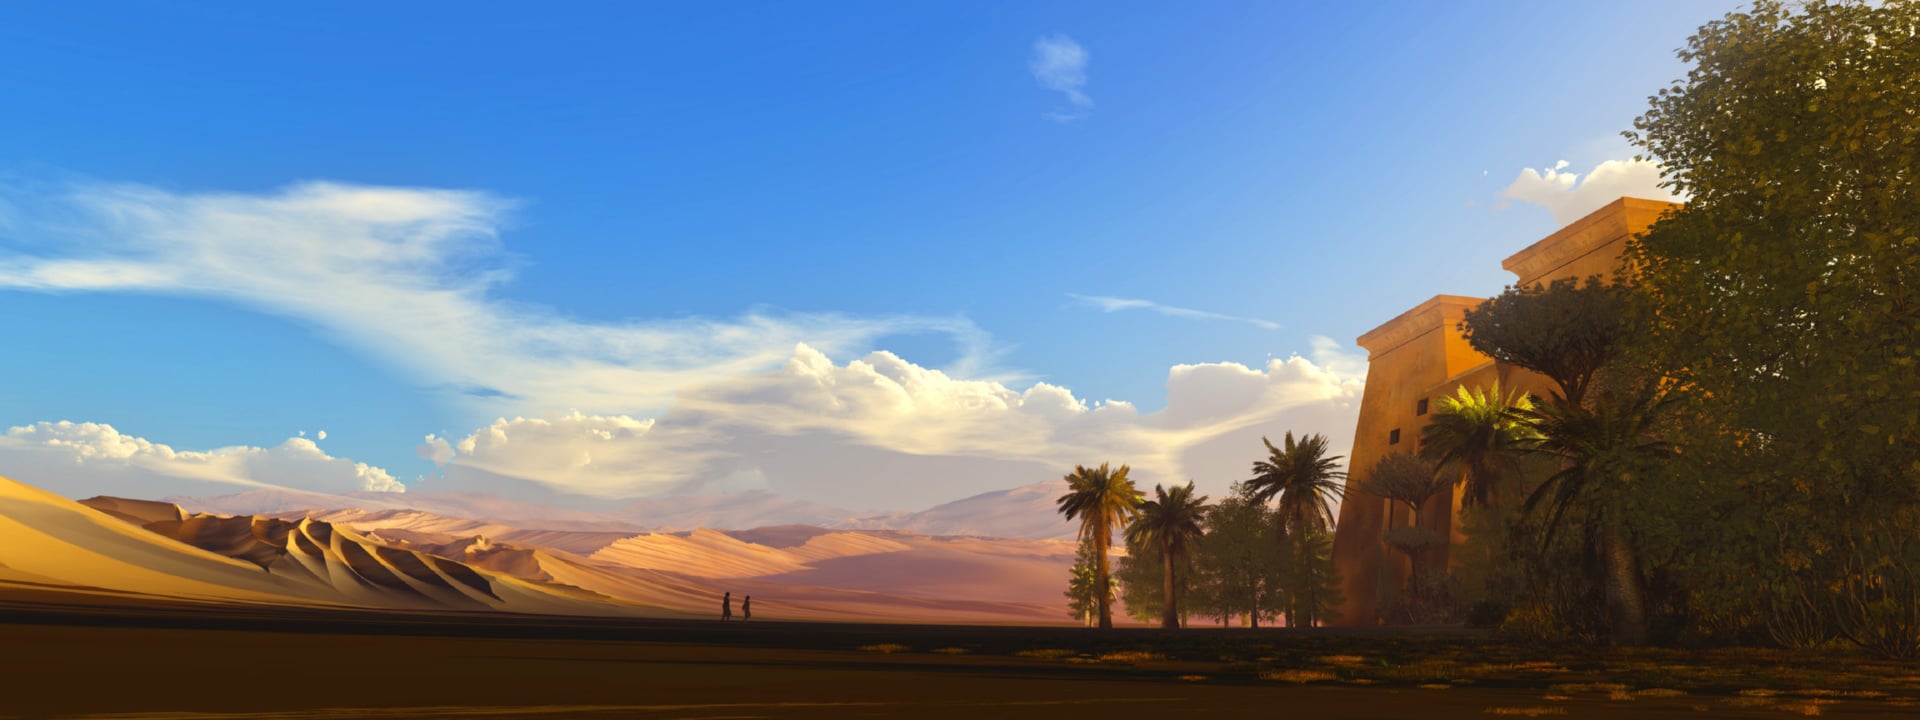 Digital Art Desert at 1280 x 960 size wallpapers HD quality